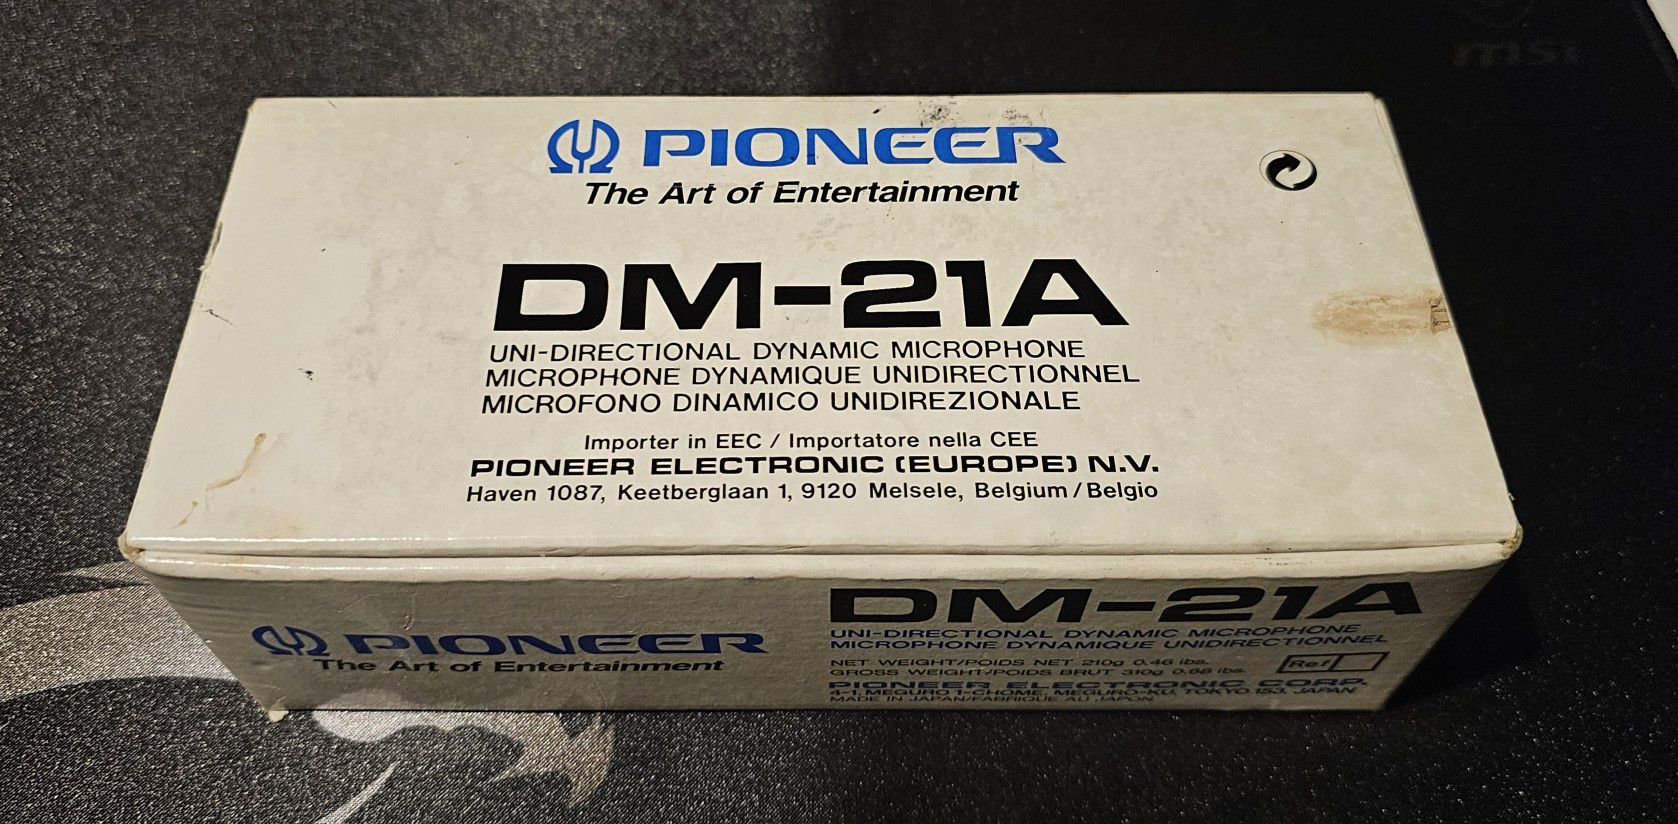 PIONEER DM - 21A MICROPHONE - UNI- DIRECTIONAL DYNAMIC MICROPHONE